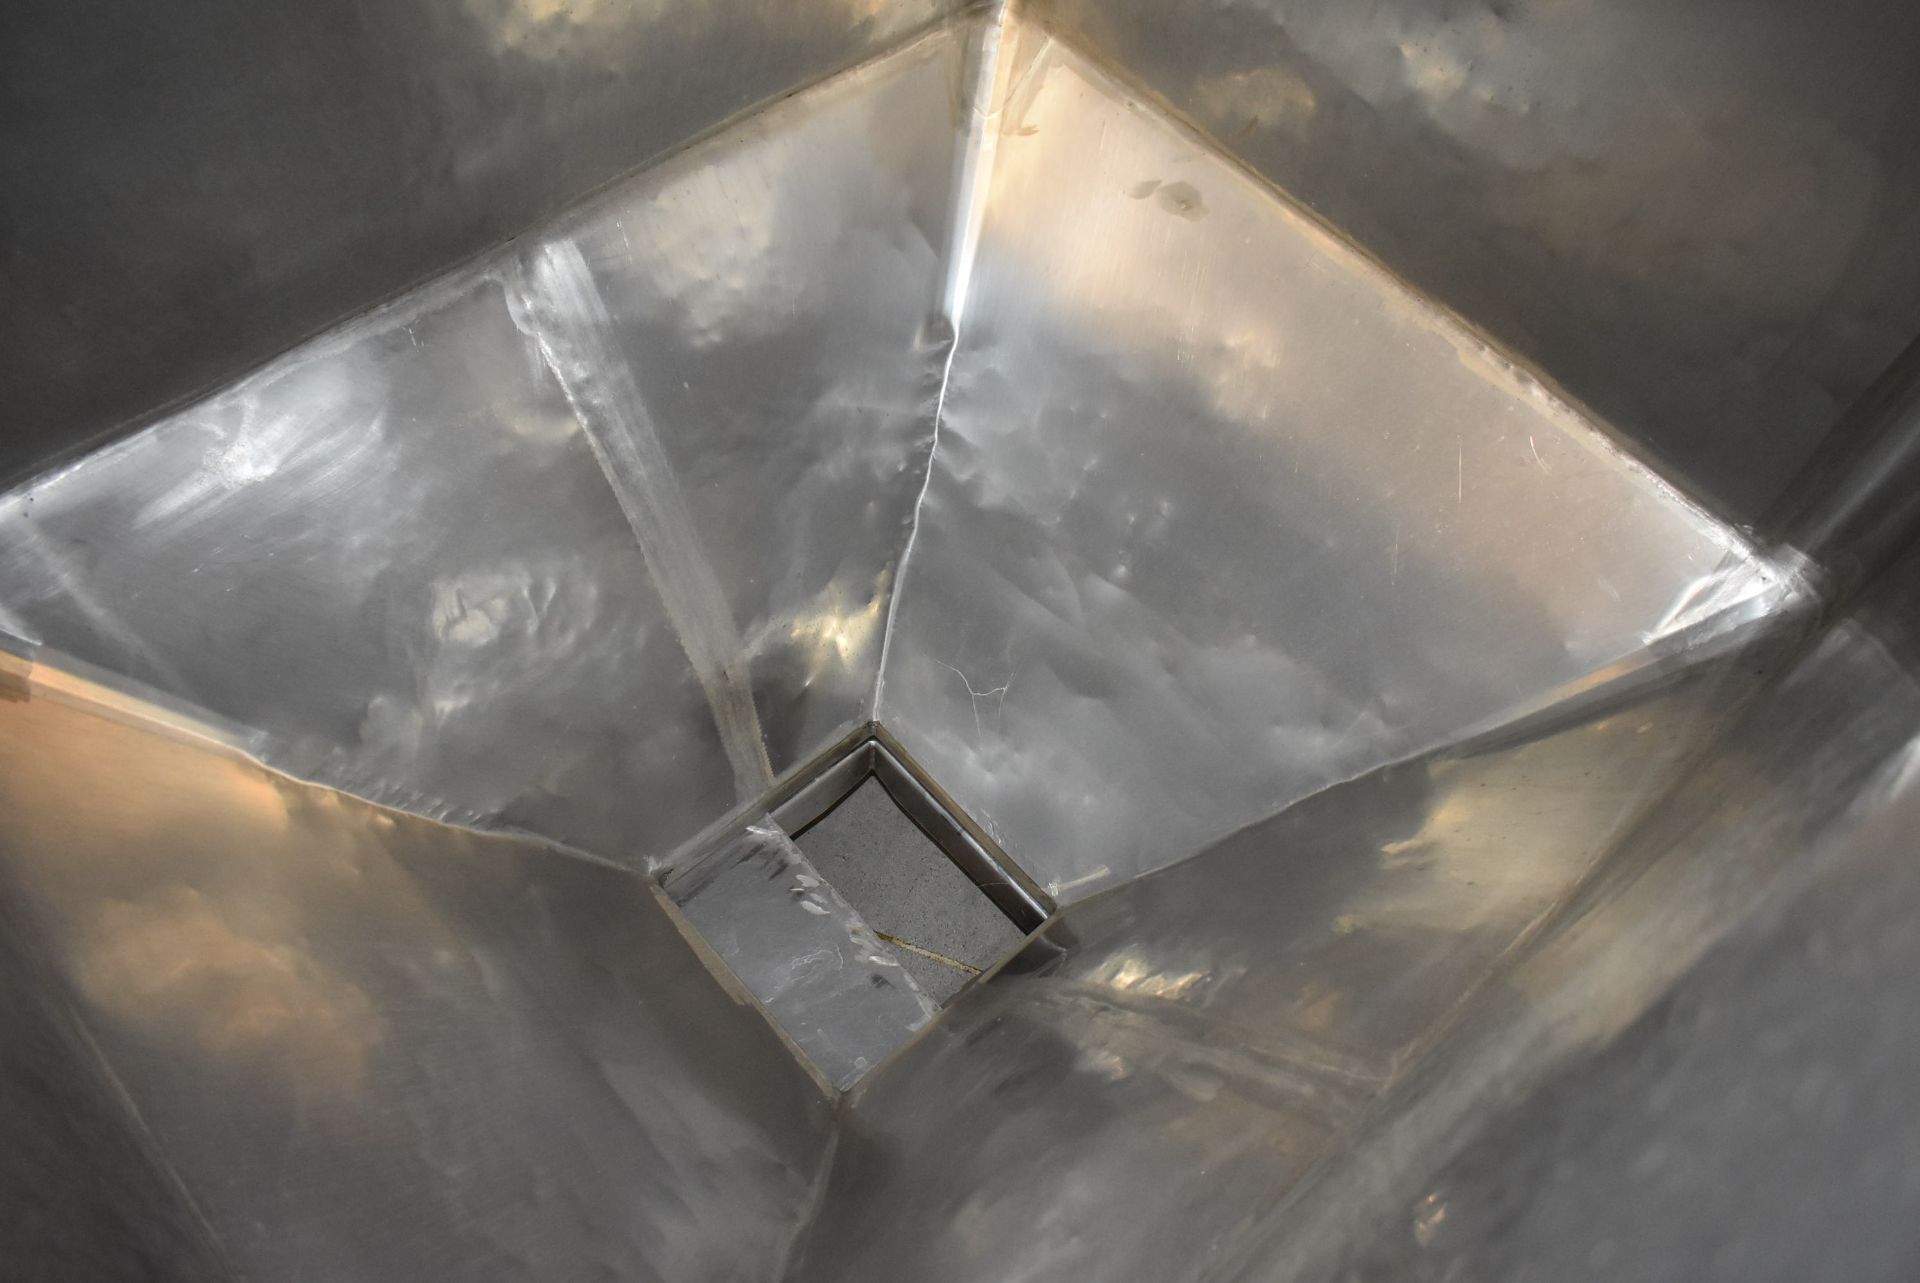 Stainless Steel Bin with Slide Gates, 4-Wheel Base, 48" x 39" x 54" Depth - Image 2 of 2